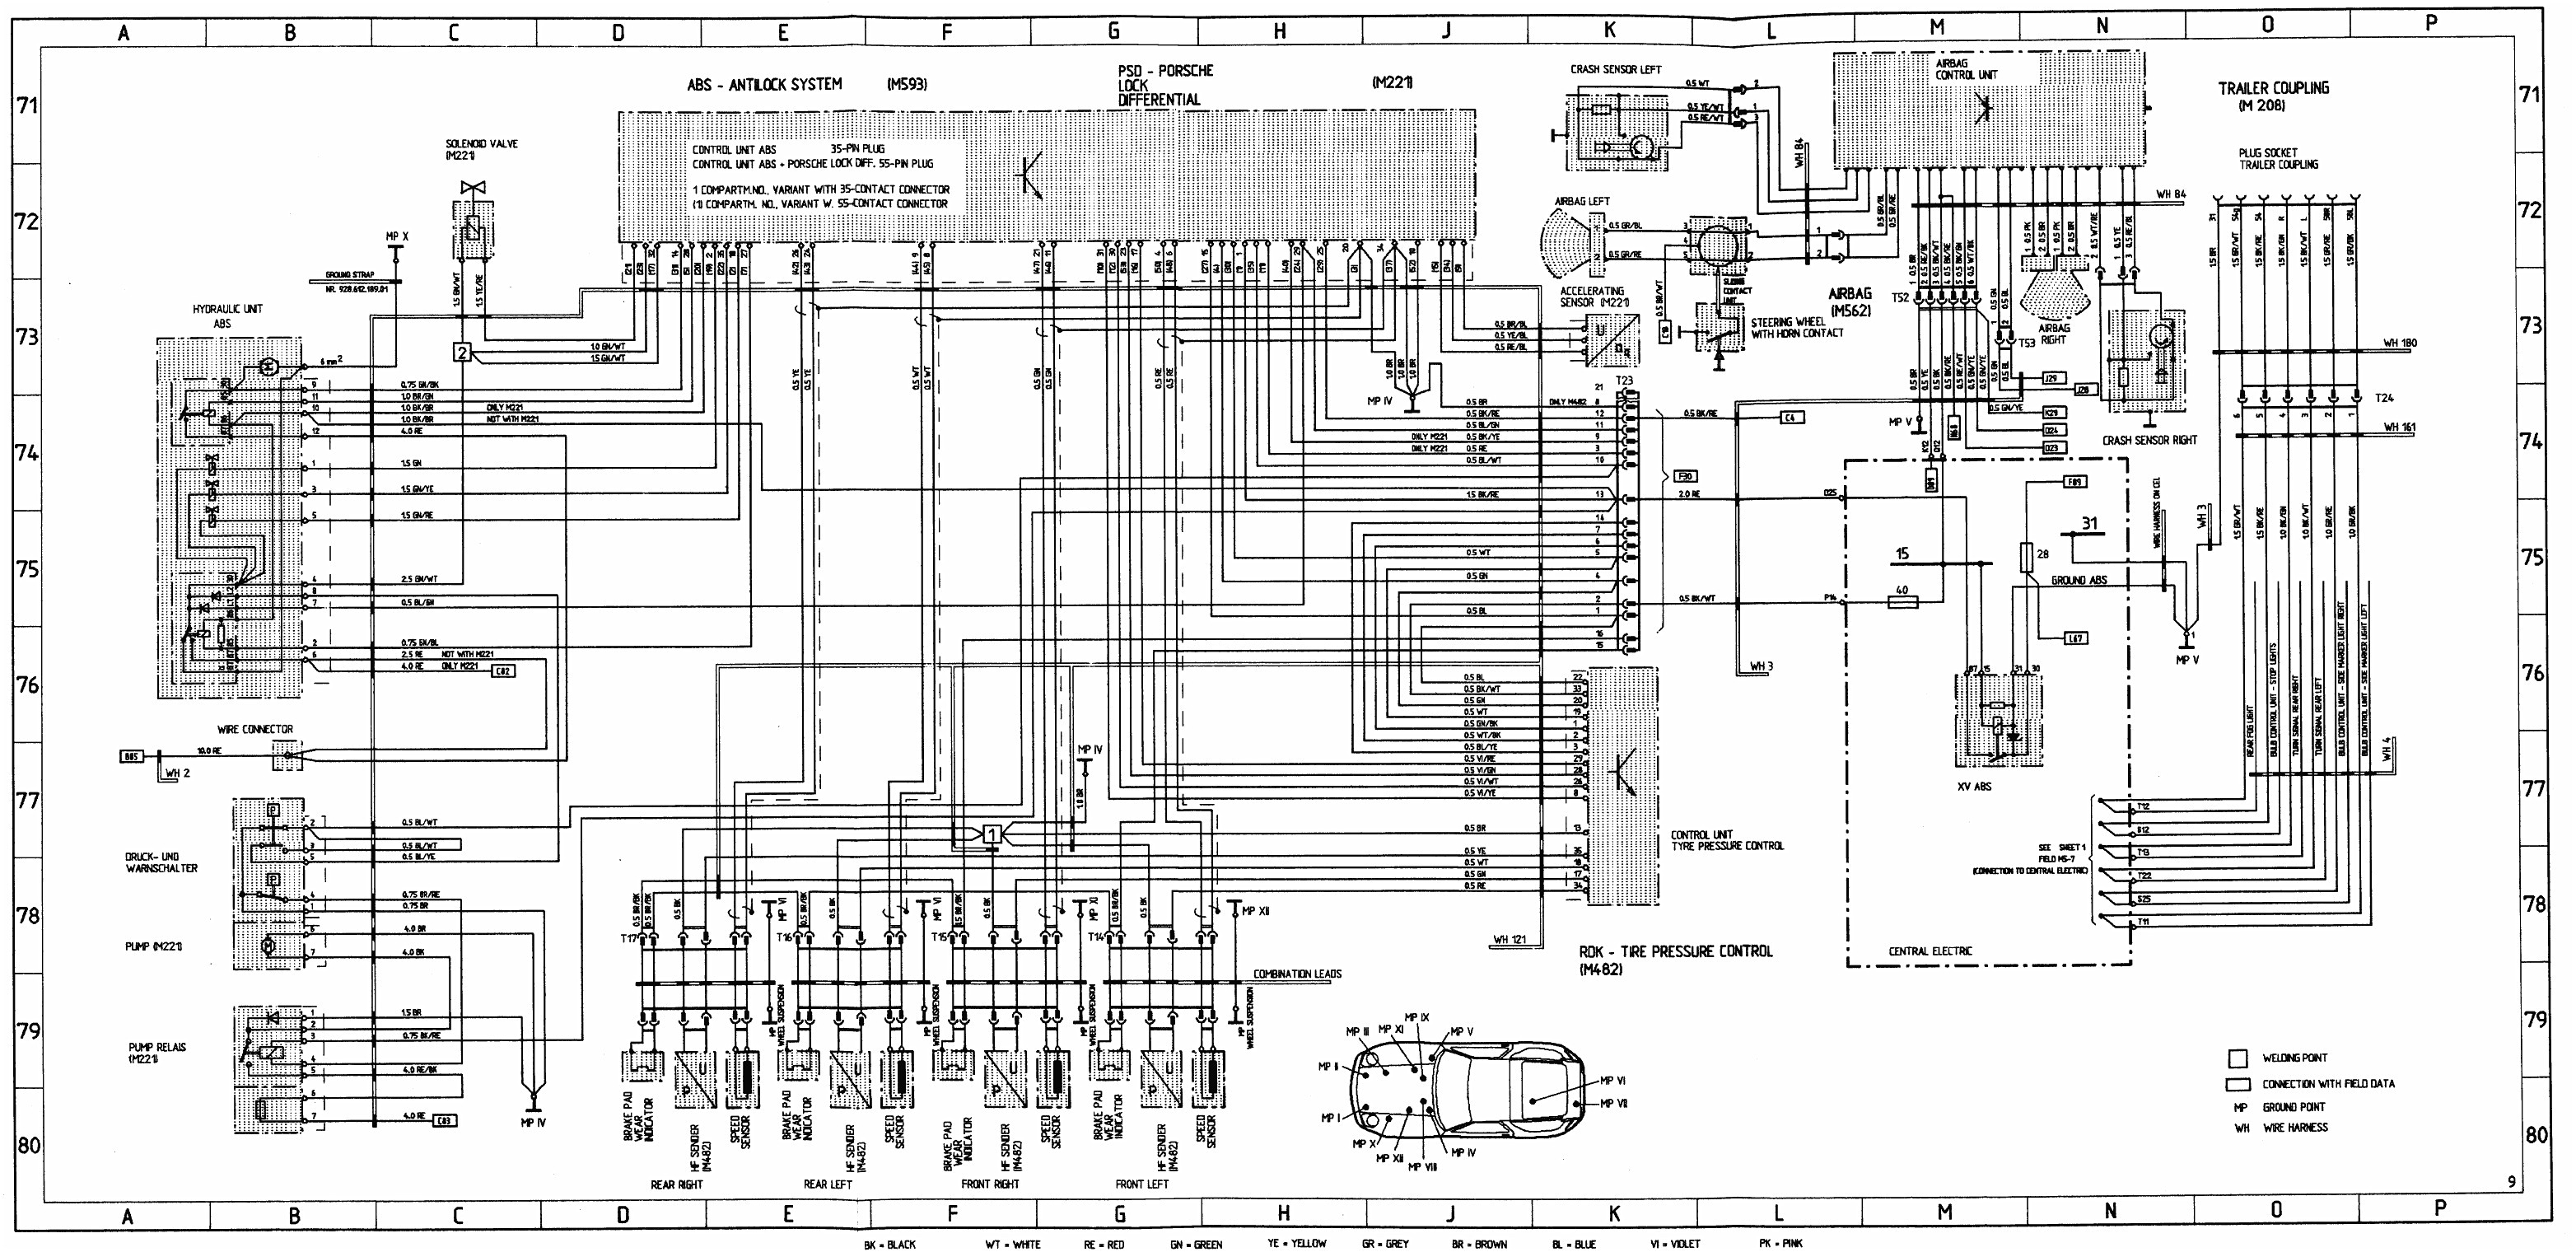 bmw 7 hid wiring diag wiring diagram fascinating bmw 7 hid wiring diag wiring diagram datasource